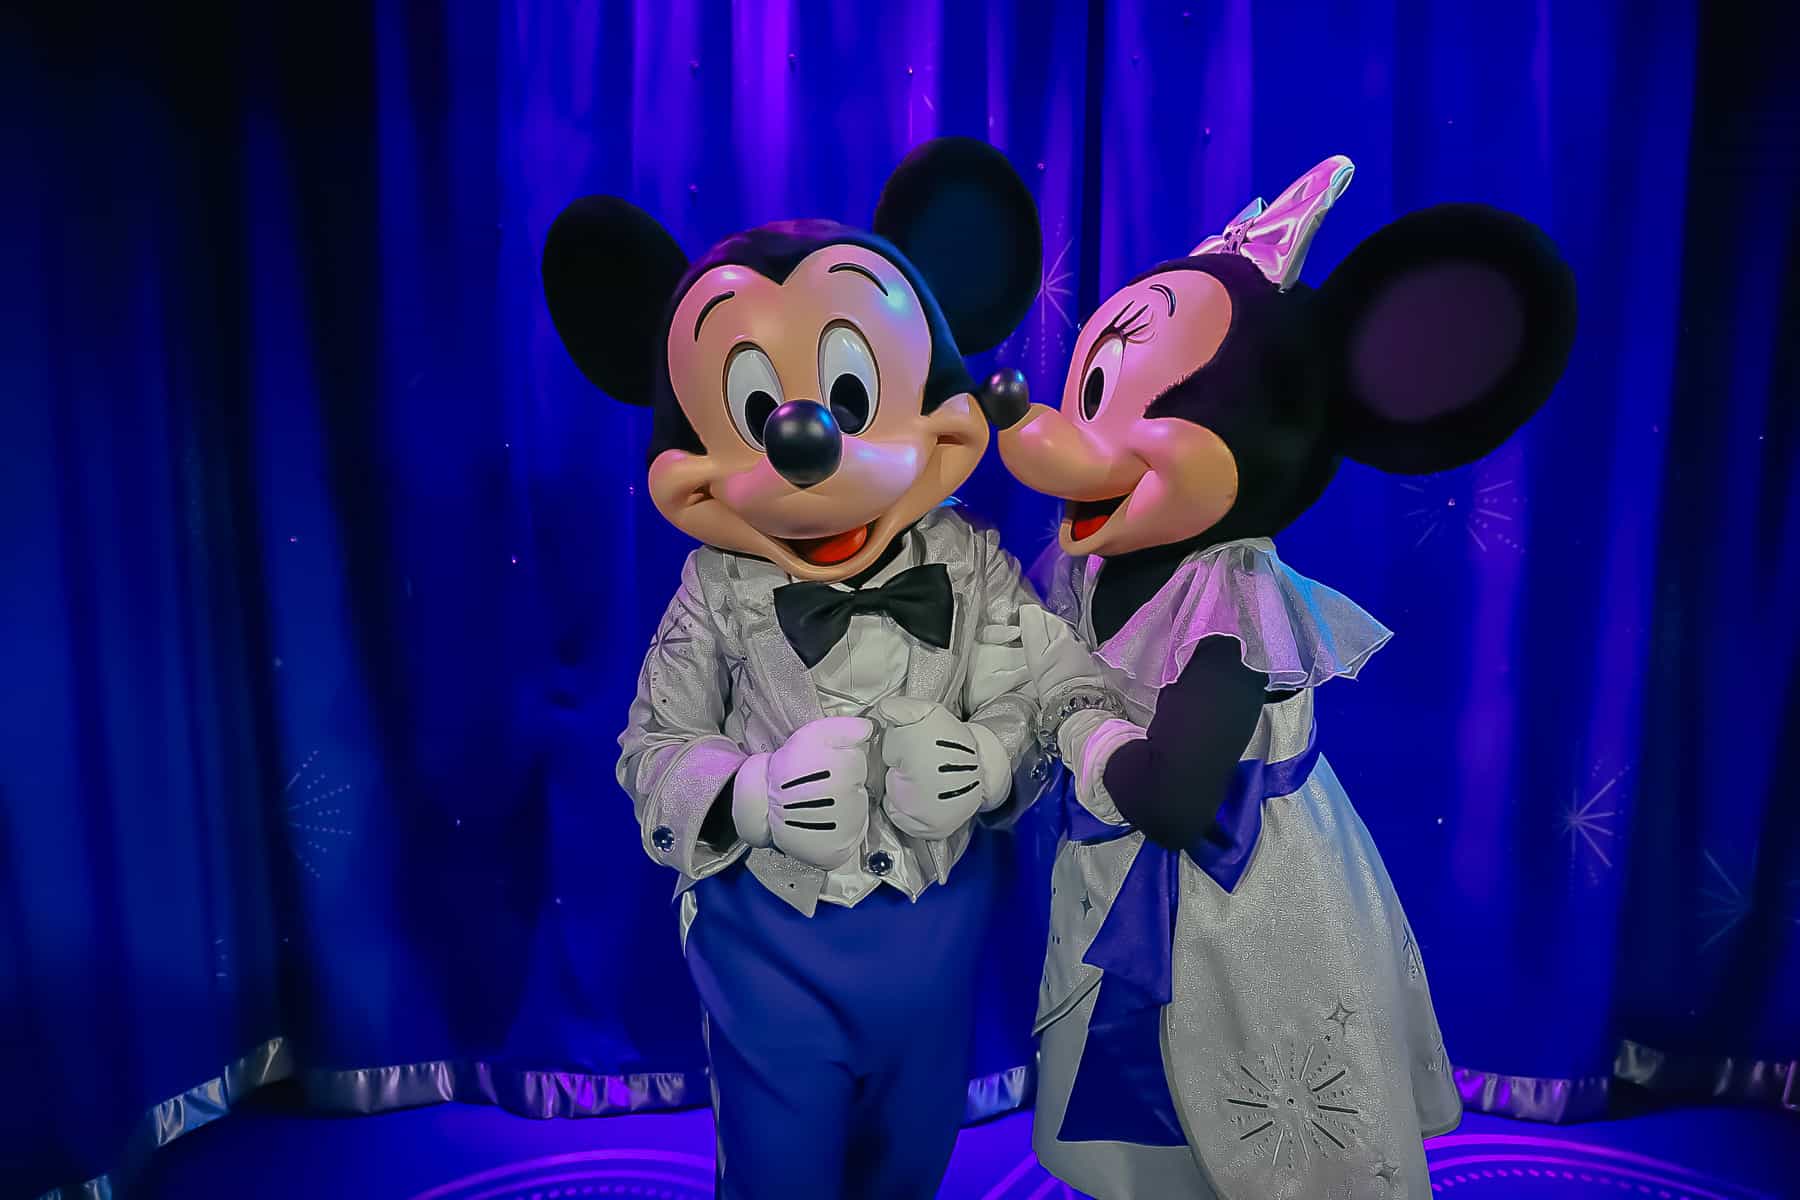 Minnie looking lovingly at Mickey. 